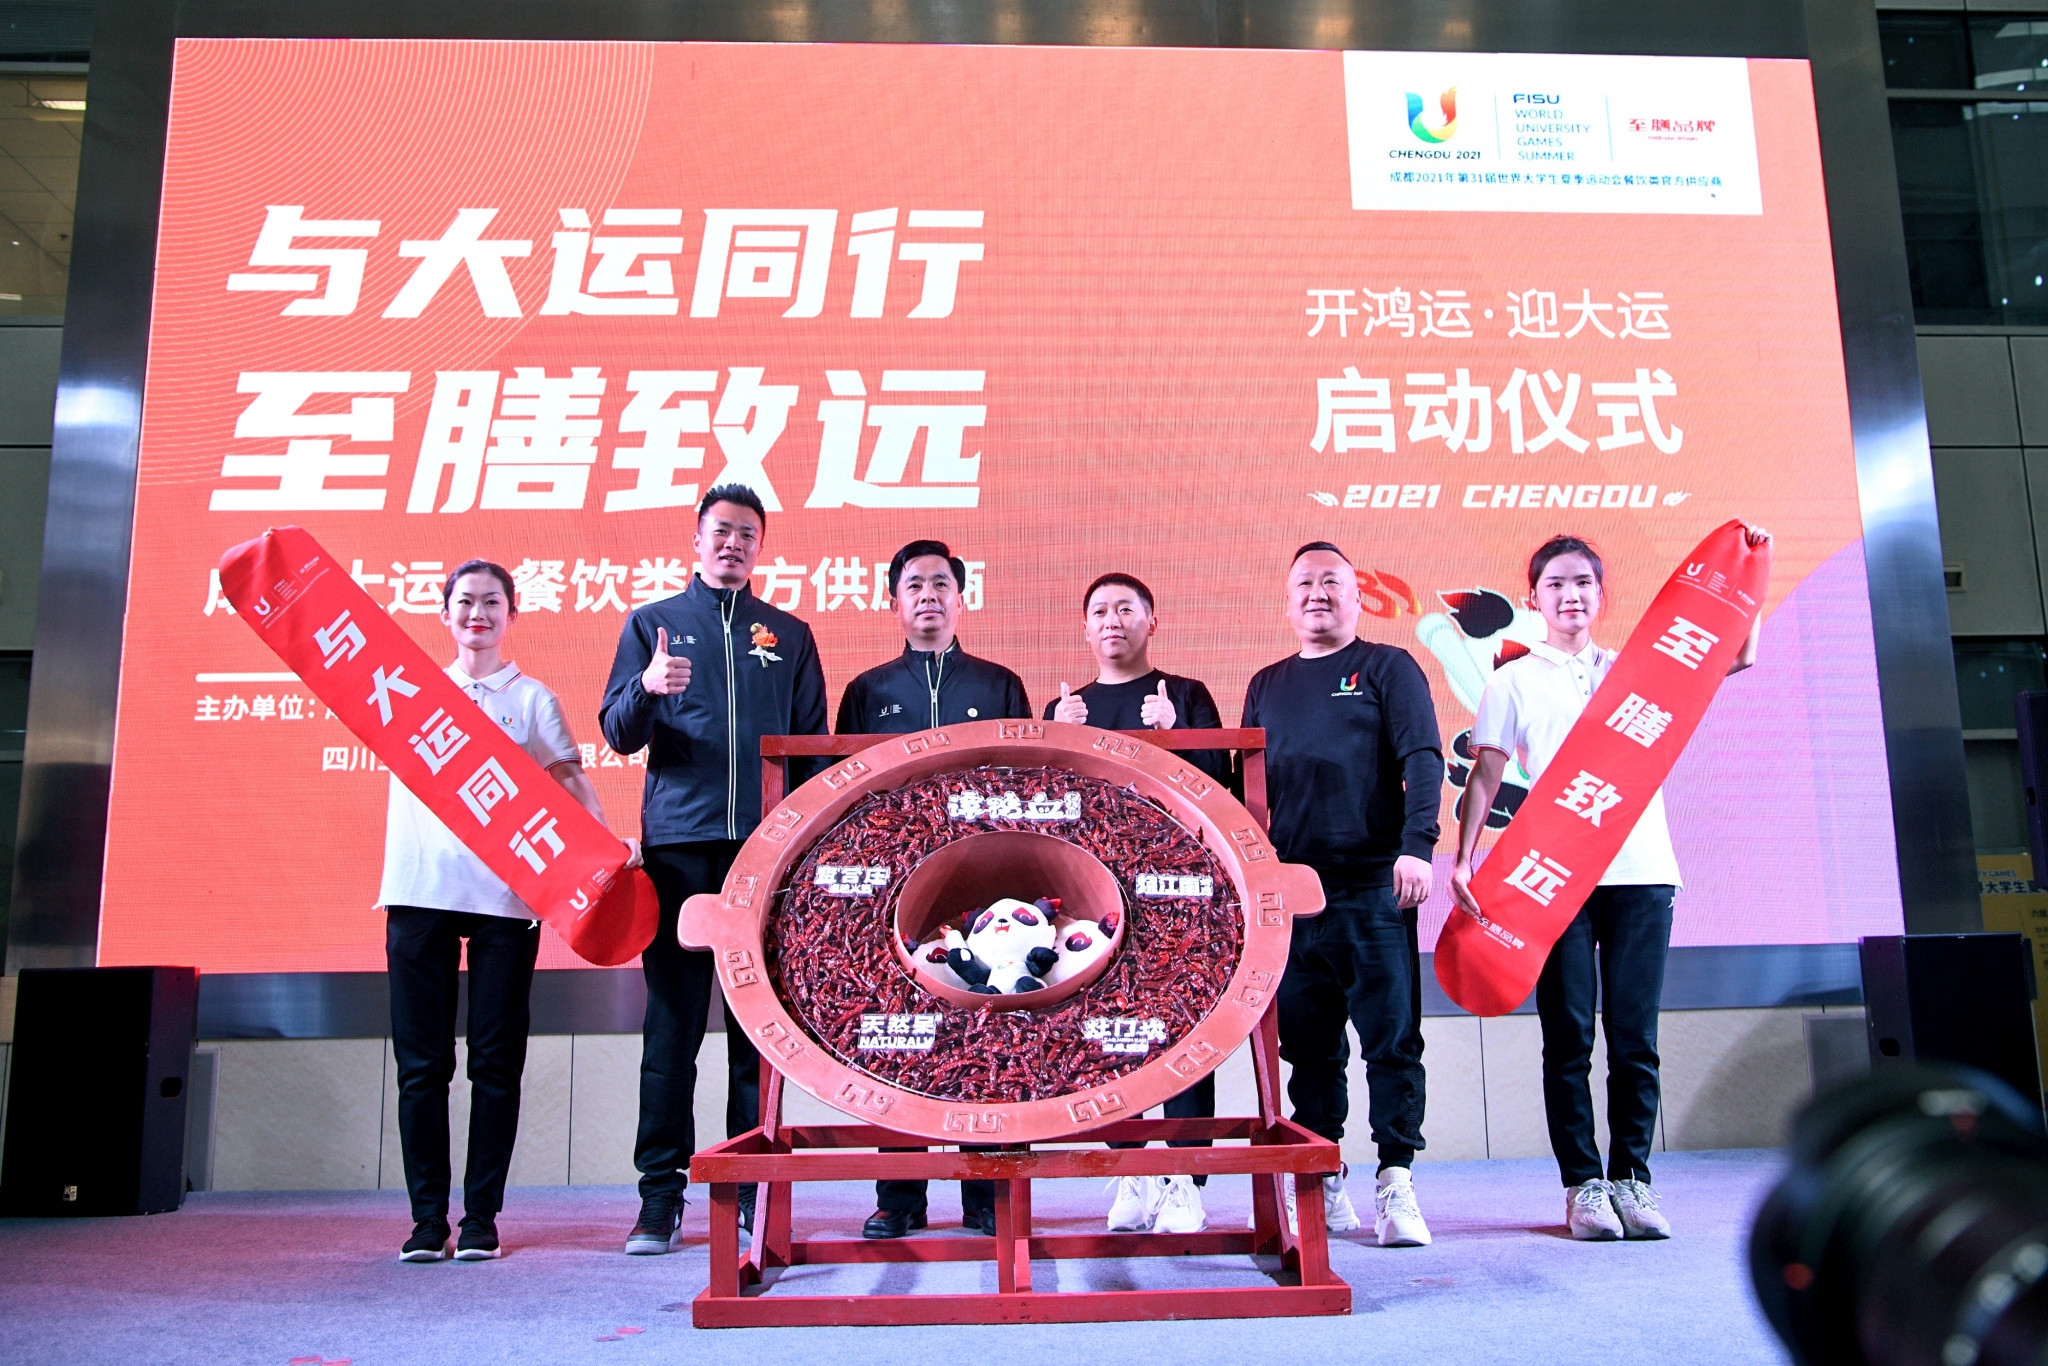 Chengdu 2021's latest partnership is with Zhishan Brand ©Chengdu 2021